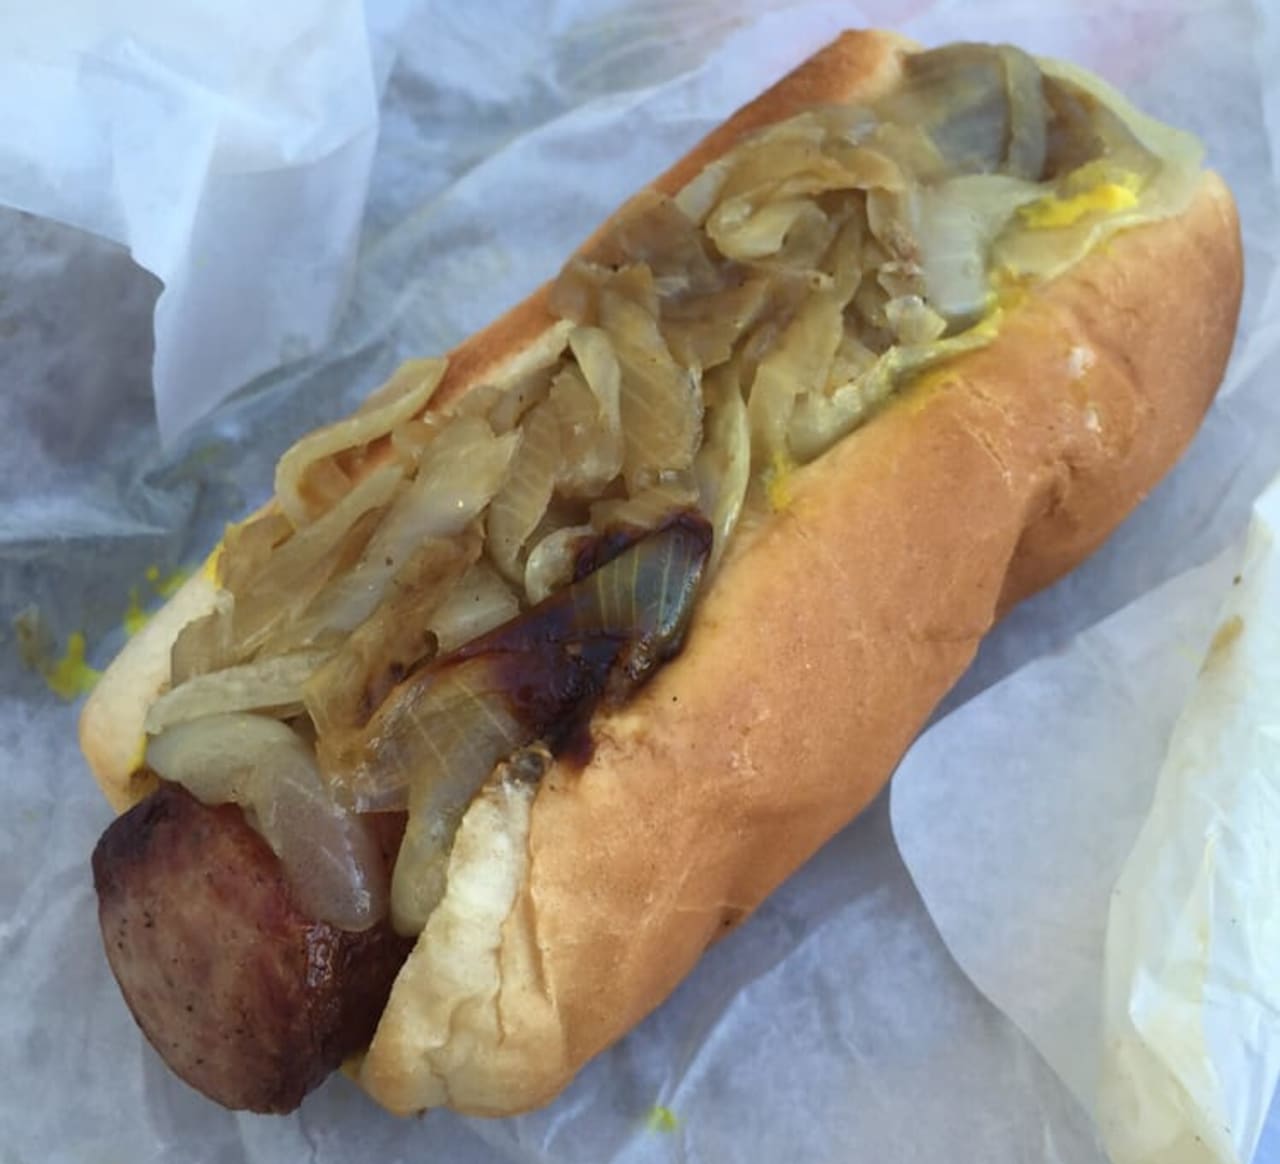 50 Super Ways to Enjoy a Hot Dog - Old Neighborhood Foods